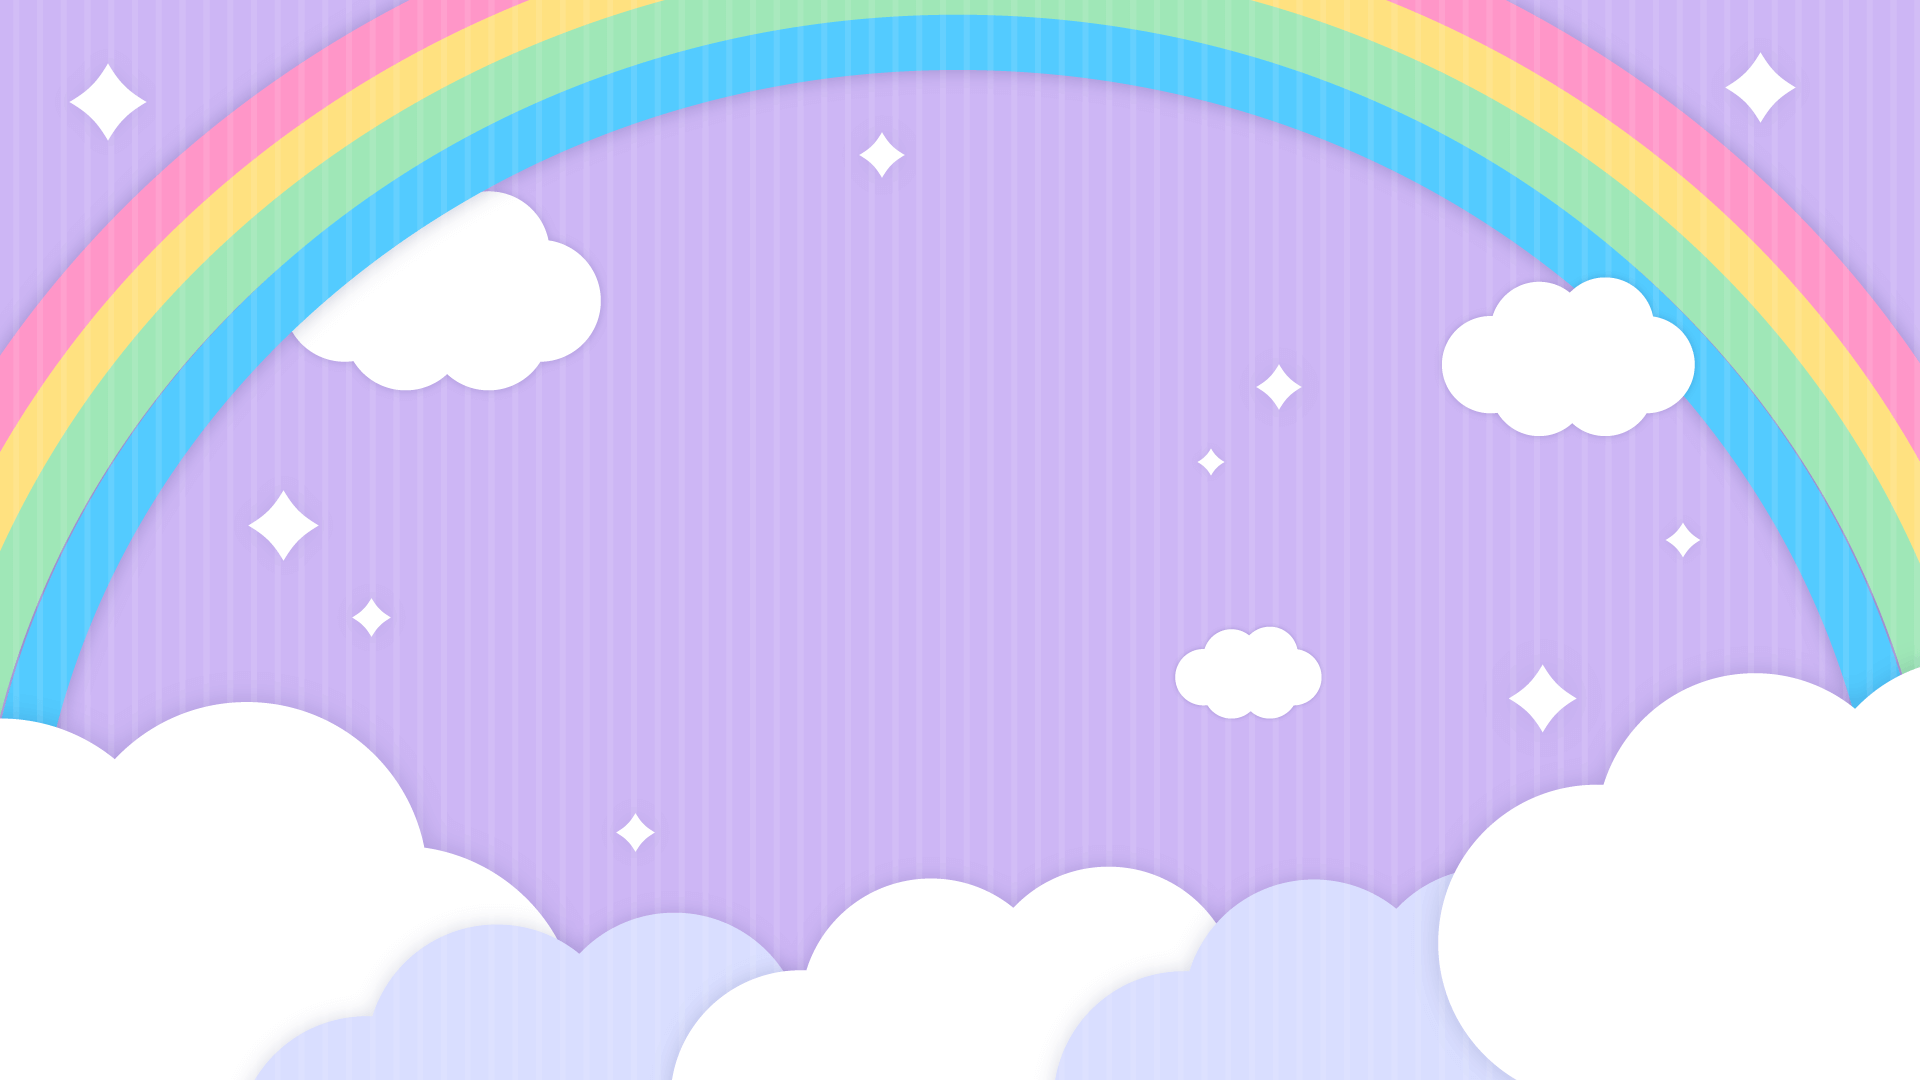 Okumono 背景 動画フリー素材 New 虹のかかる背景 7種 T Co Rshu5t4rga 雲と虹を描いたフリー素材です 雨があがり 晴れやかな空が広がっている背景 梅雨明けにもぴったり Okumono フリー素材 Vtuber T Co Kobl99mjqe